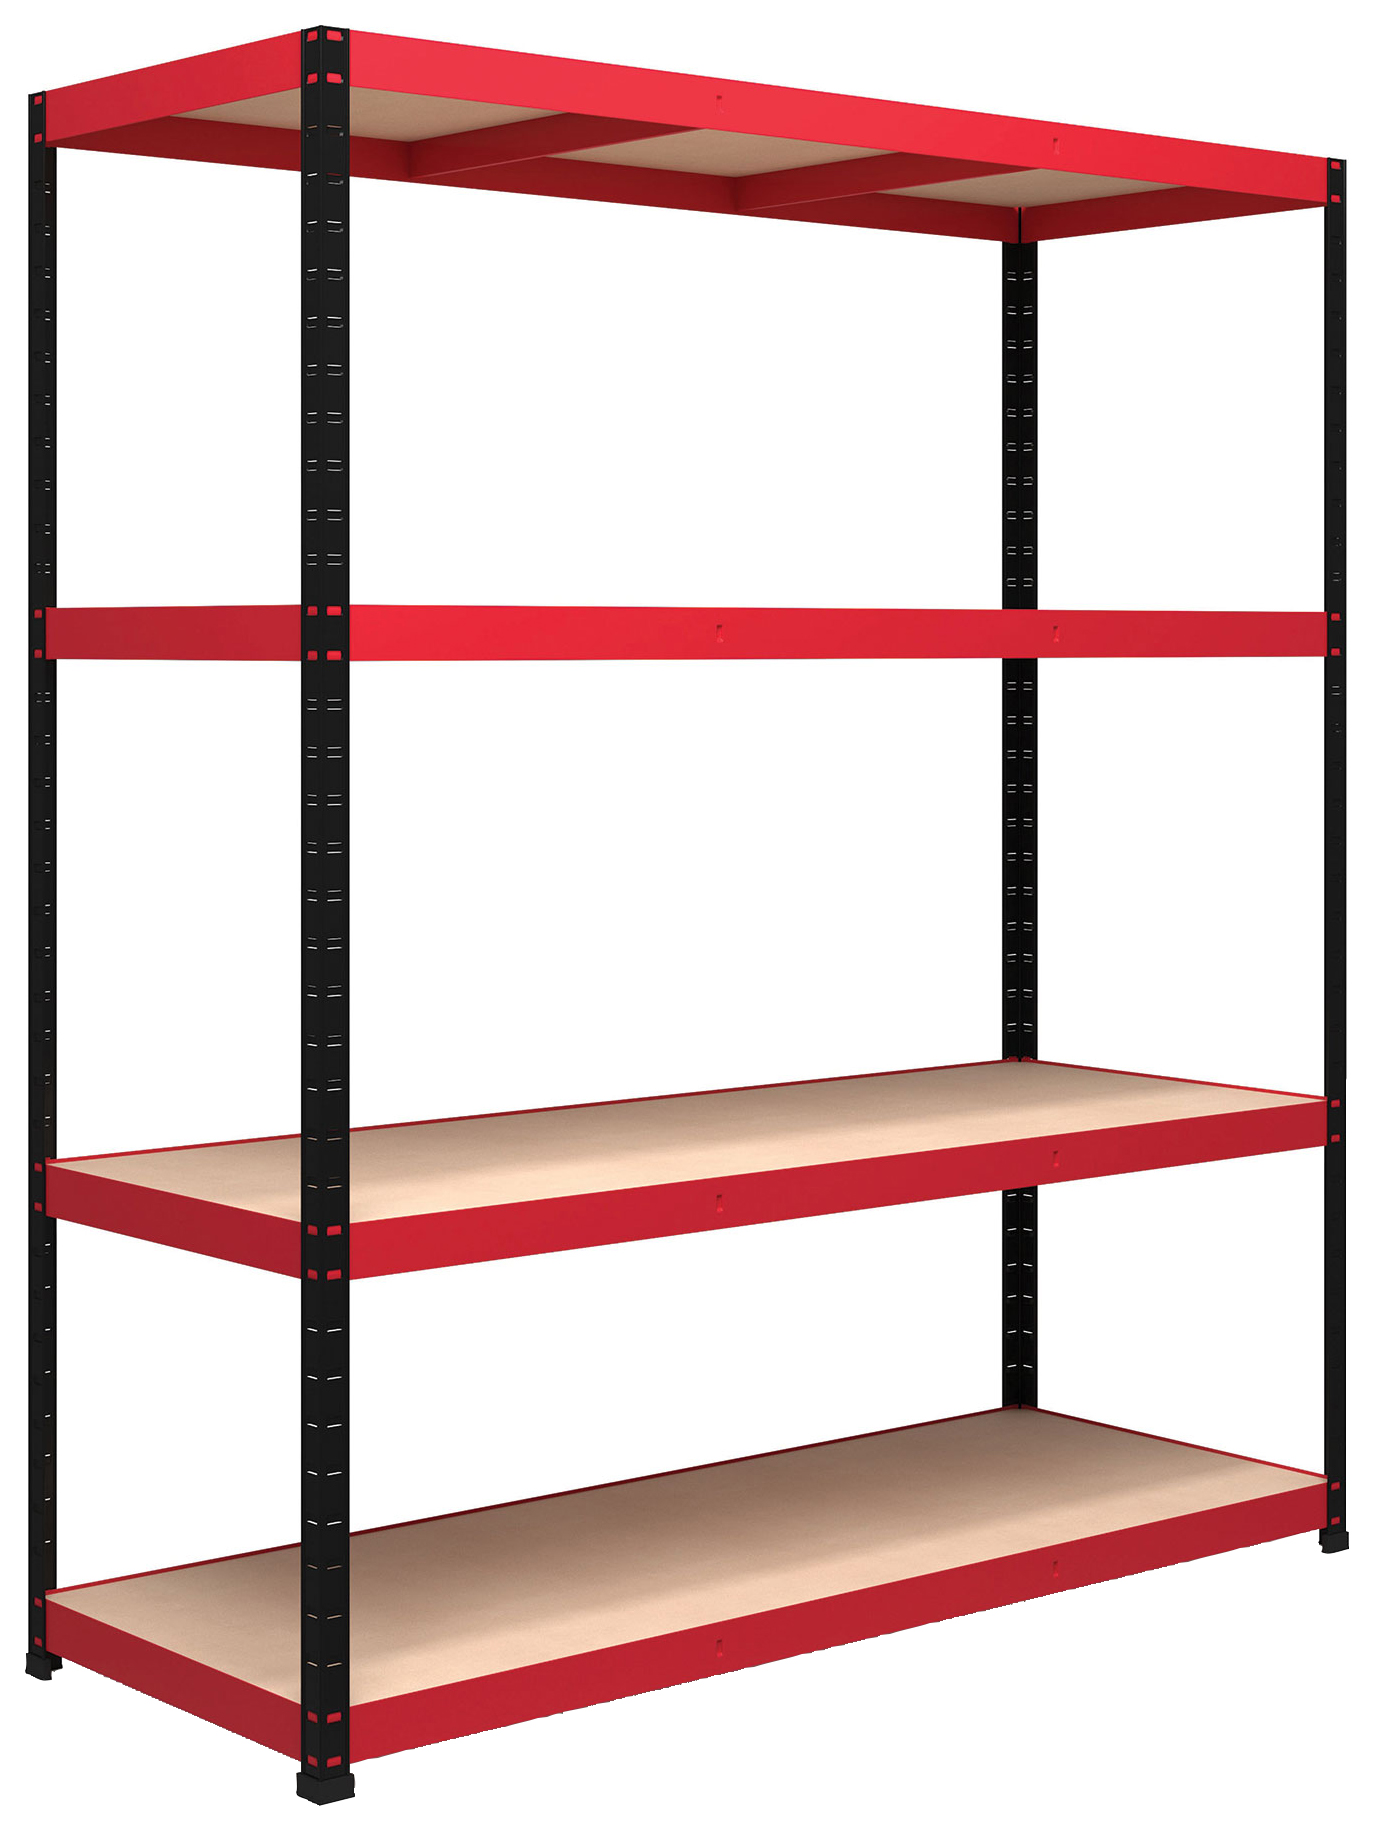 Rb Boss Shelf Kit 4 Wood Shelves - 1800 x 1600 x 600mm 300kg Udl